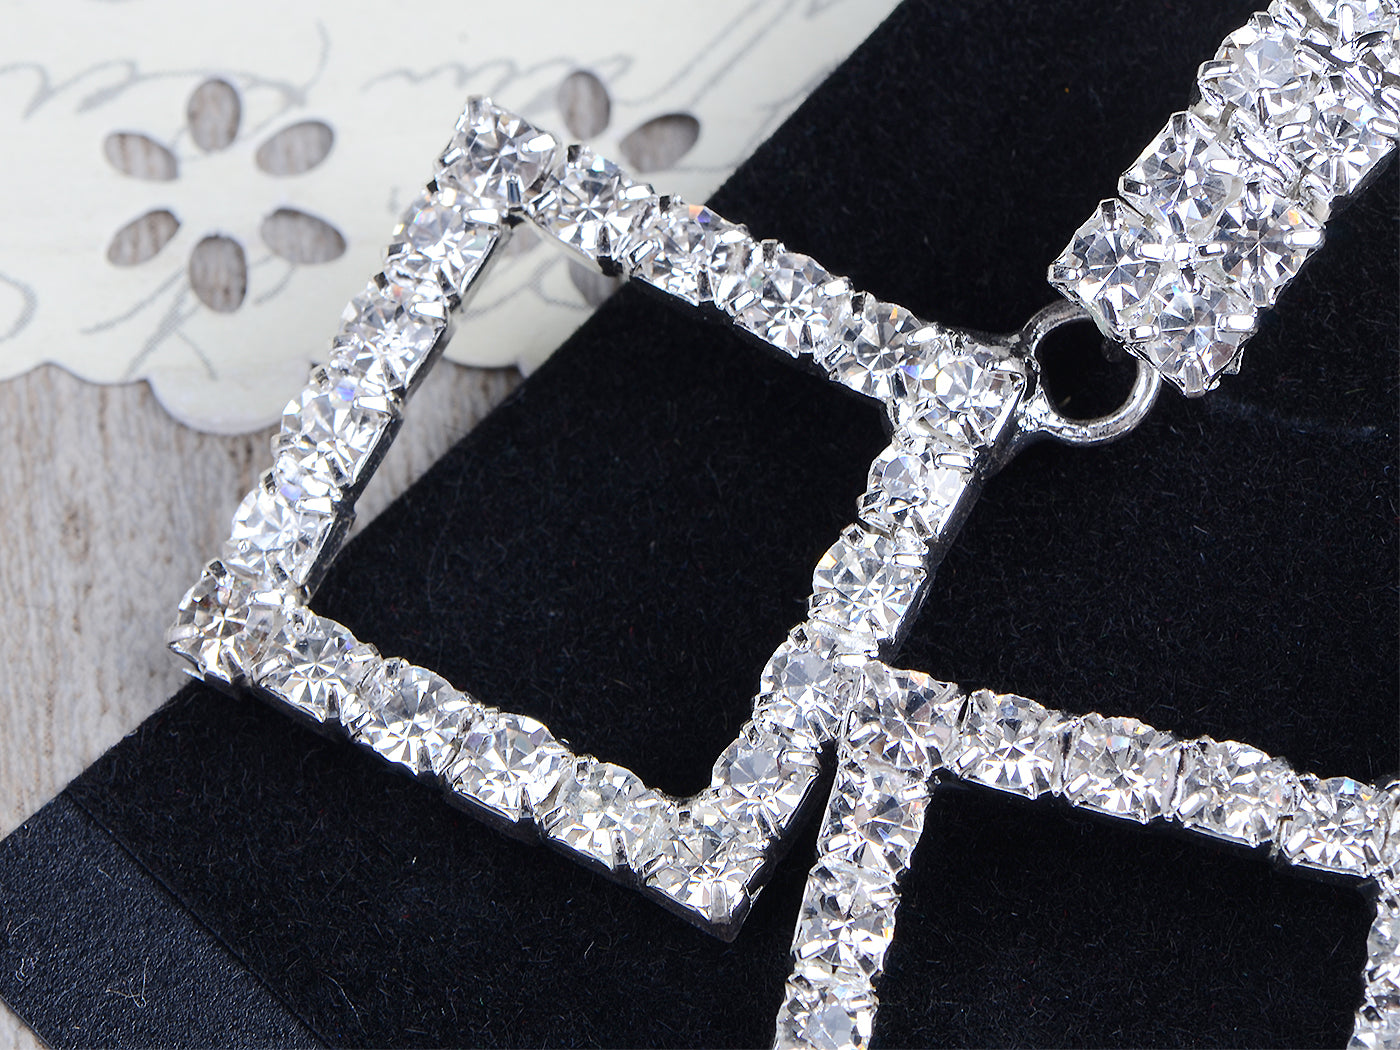 Silver Square Dangle Earrings Wedding Bridal